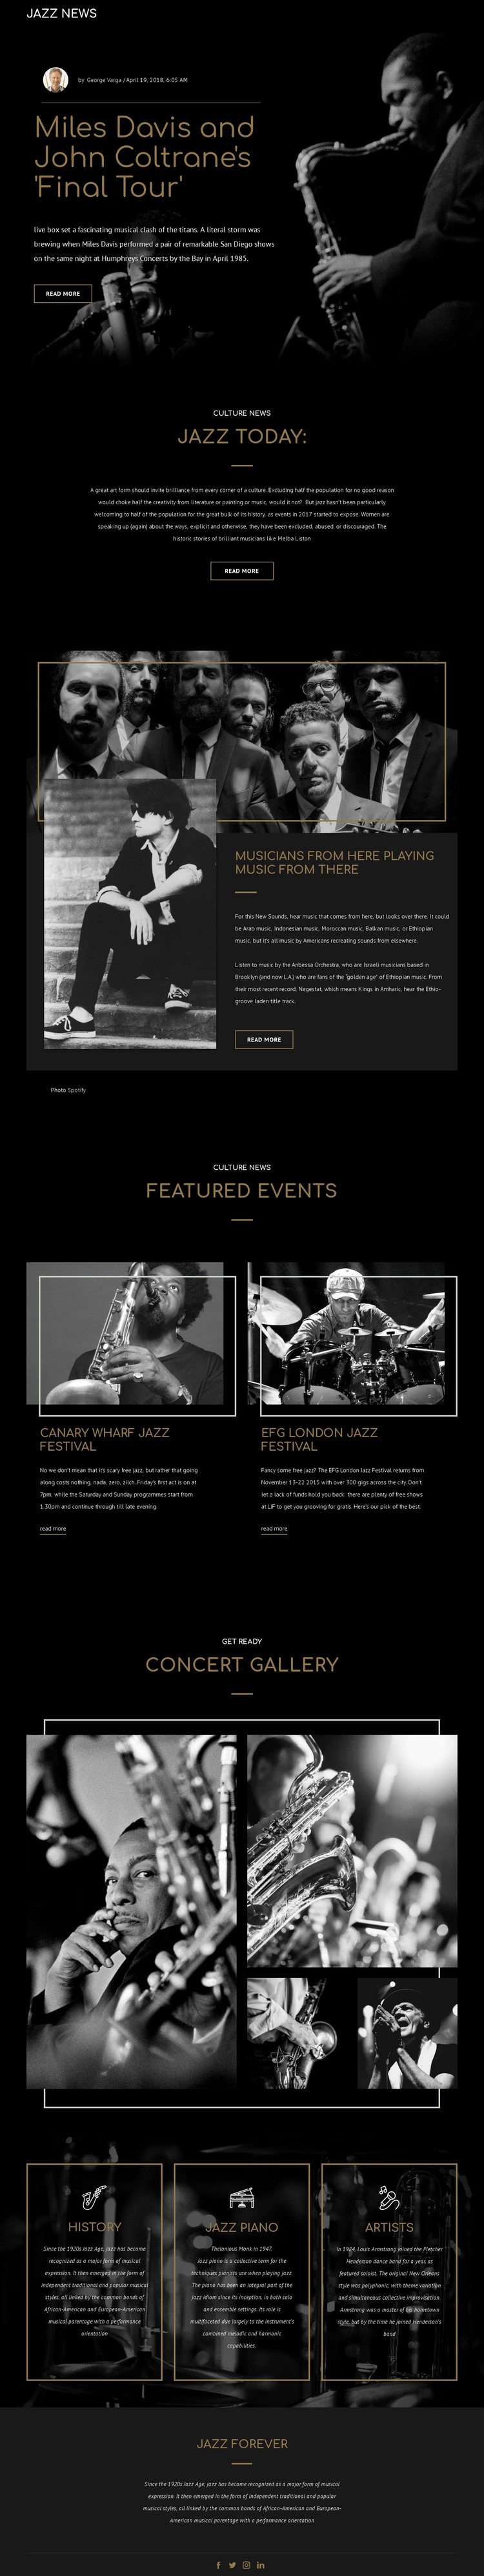 Legengs of jazz music Web Design